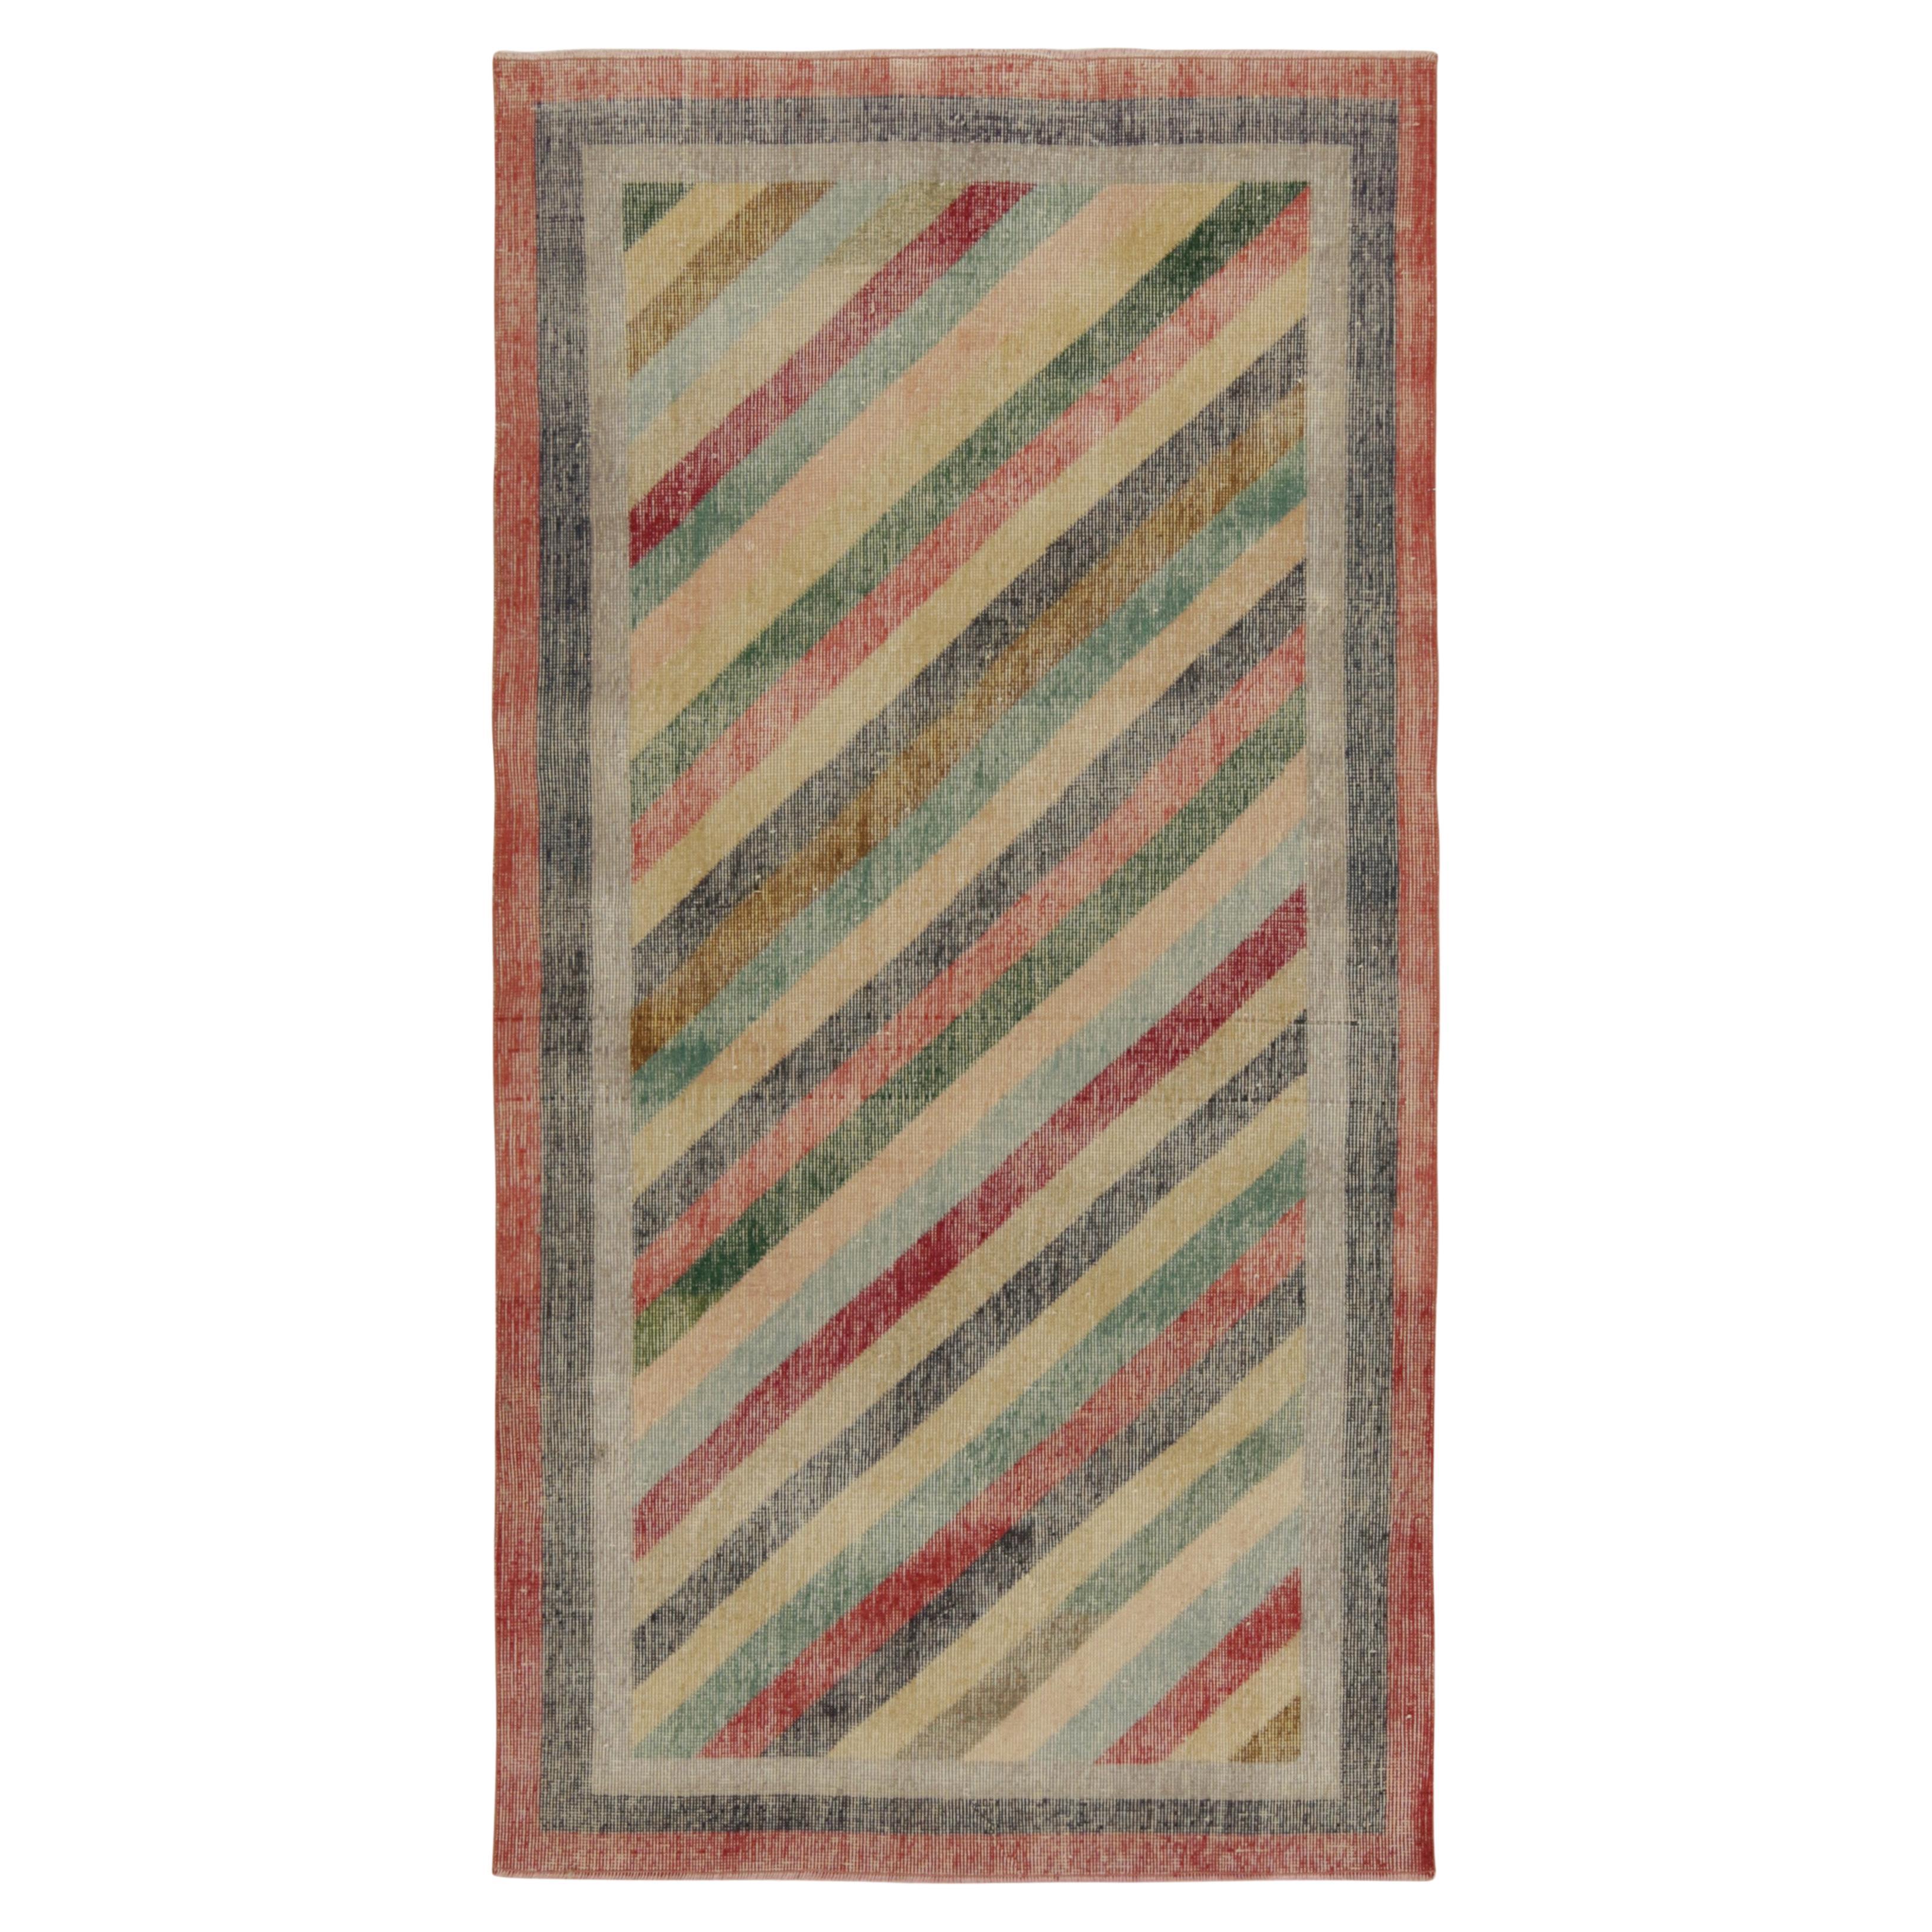 Vintage Distressed Zeki Müren Rug in Polychromatic Stripes, by Rug & Kilim For Sale